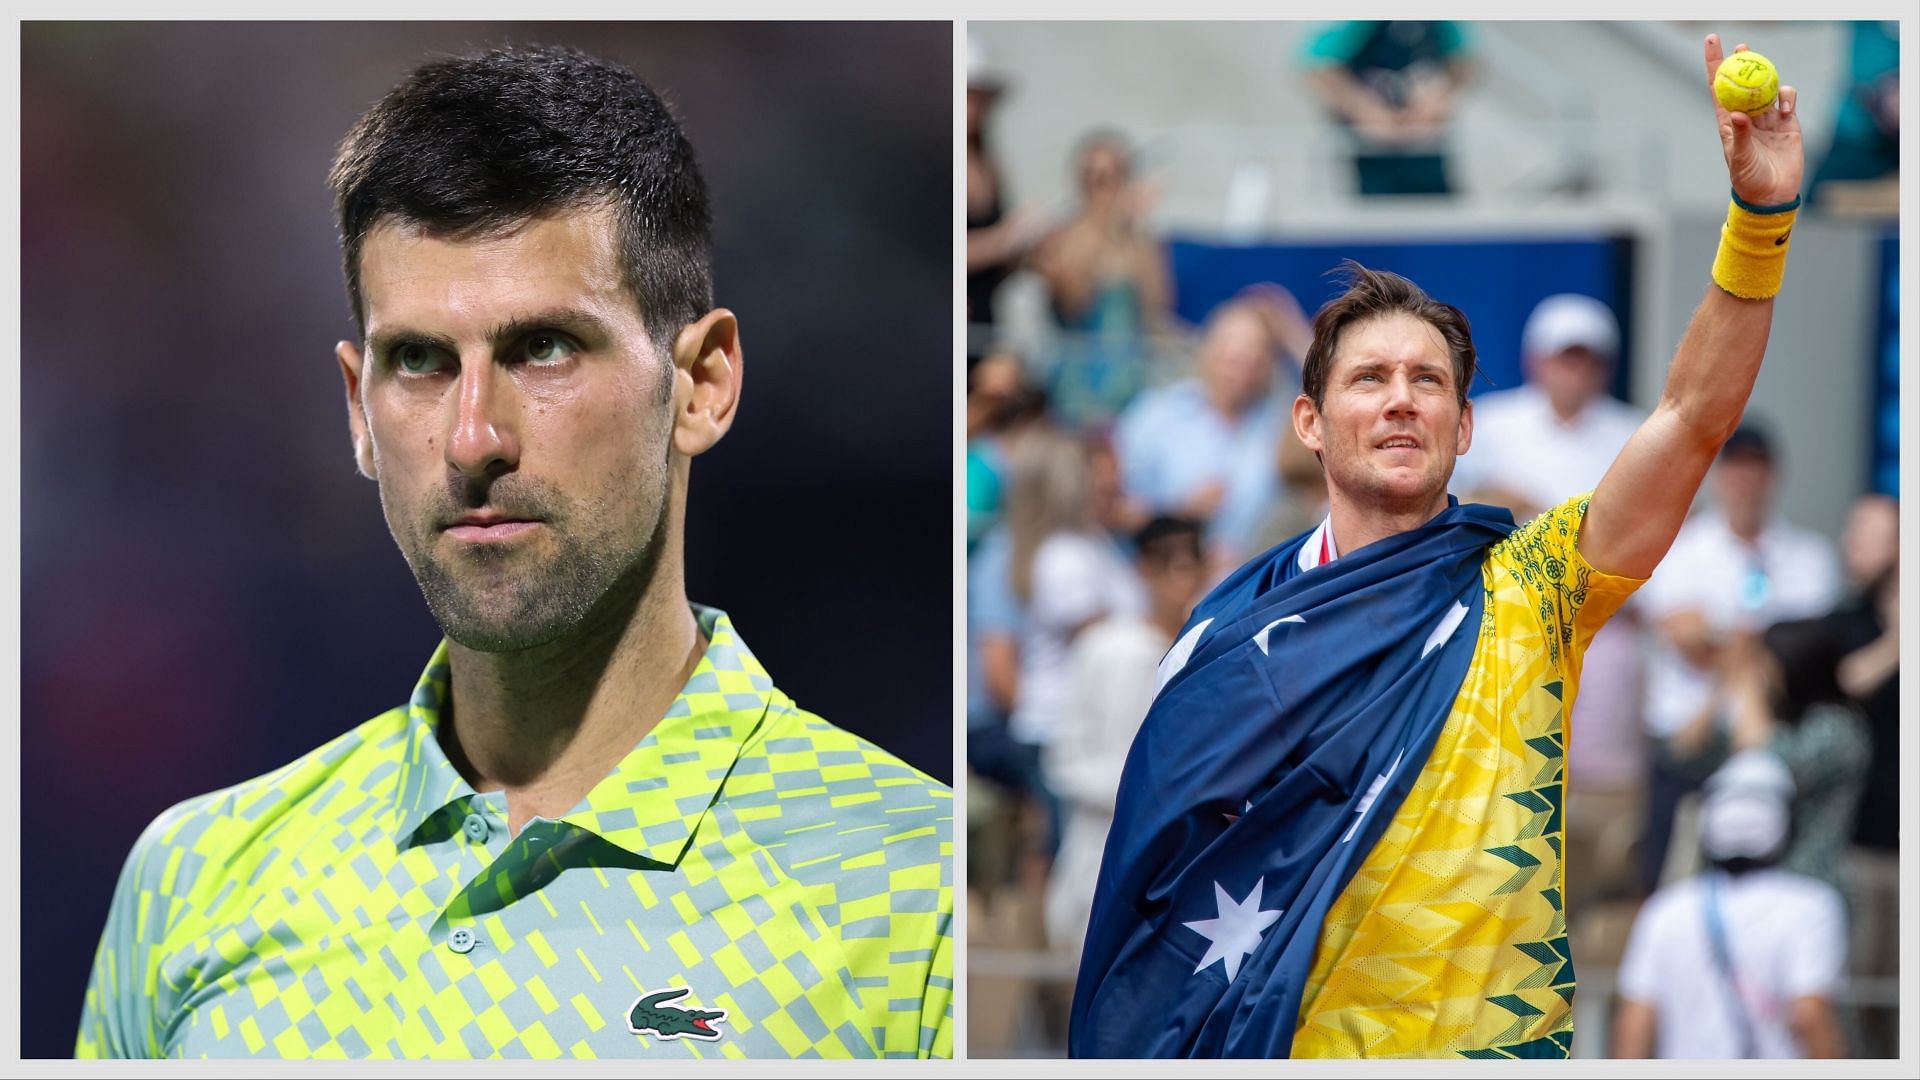 From apologizing to Novak Djokovic for 1R thrashing to winning gold: Matthew Ebden's incredible Paris Olympics journey